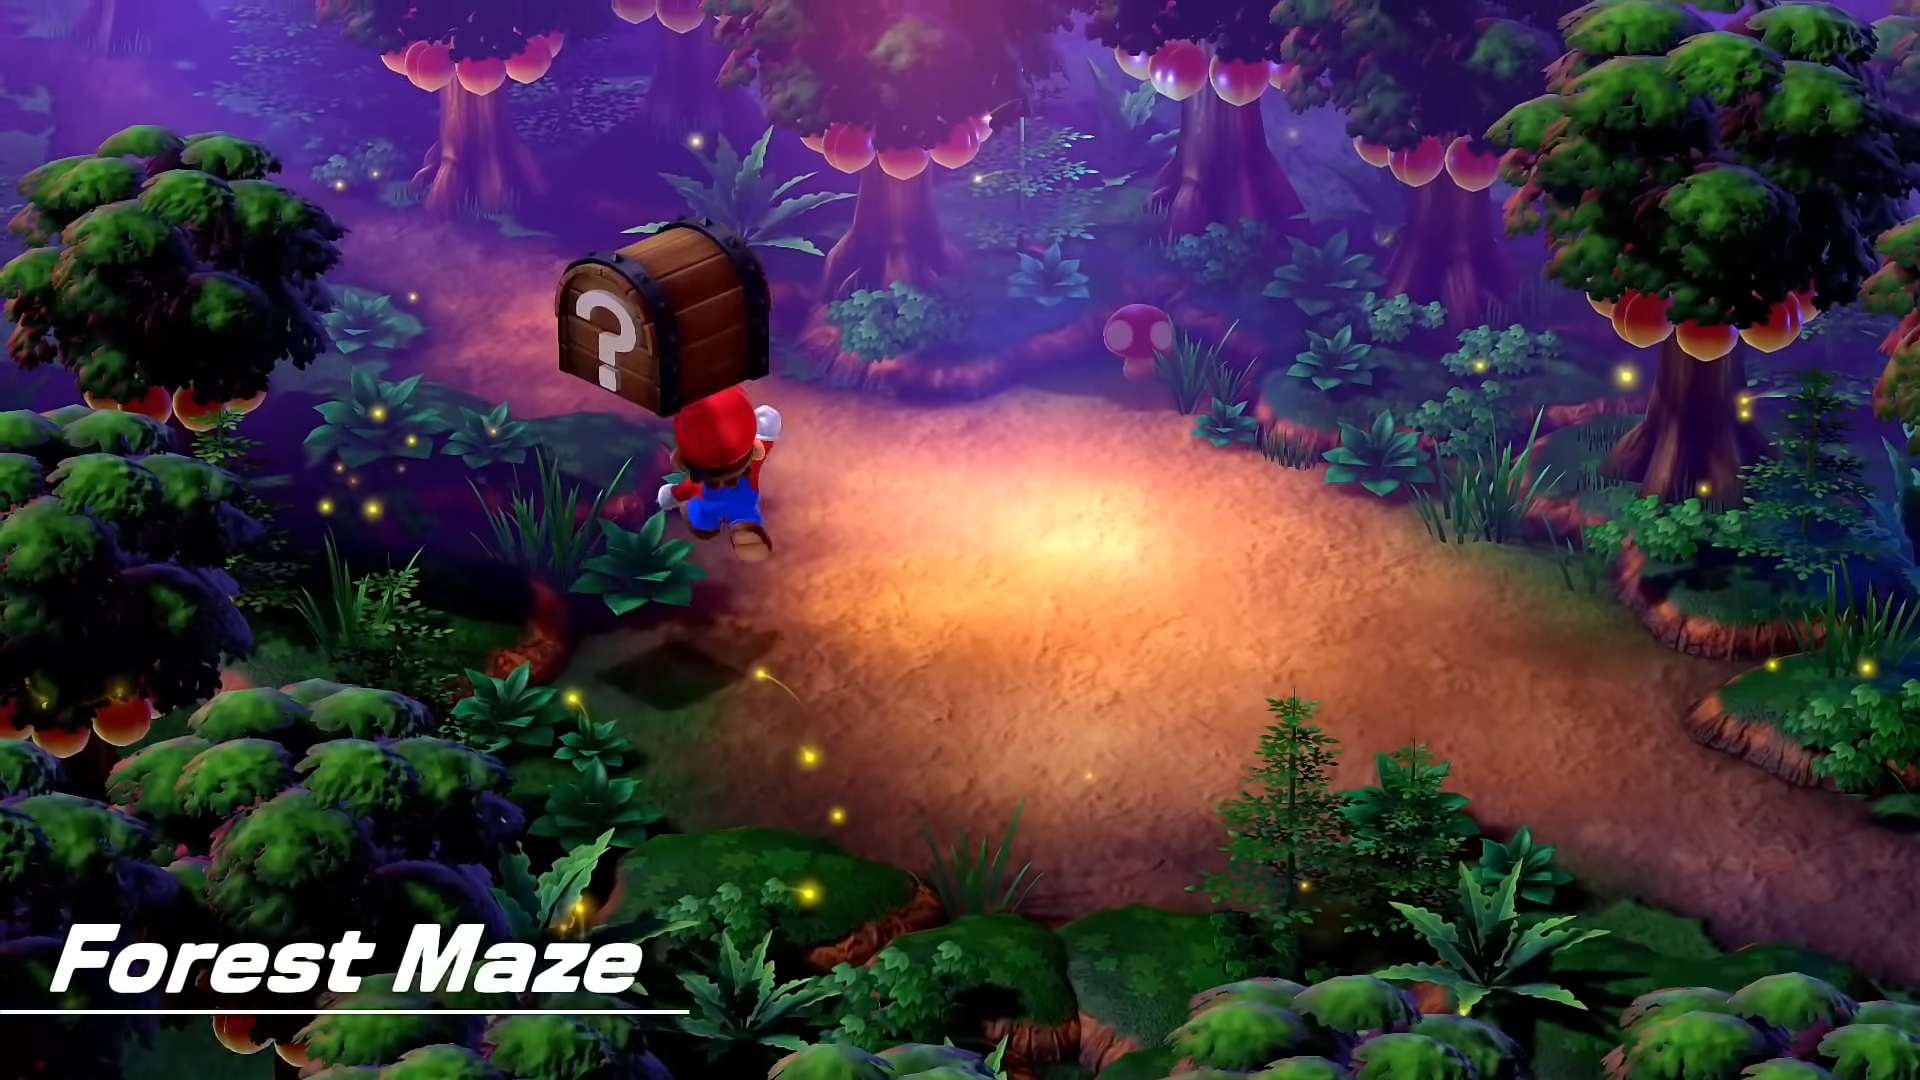 Mario entering a forest.